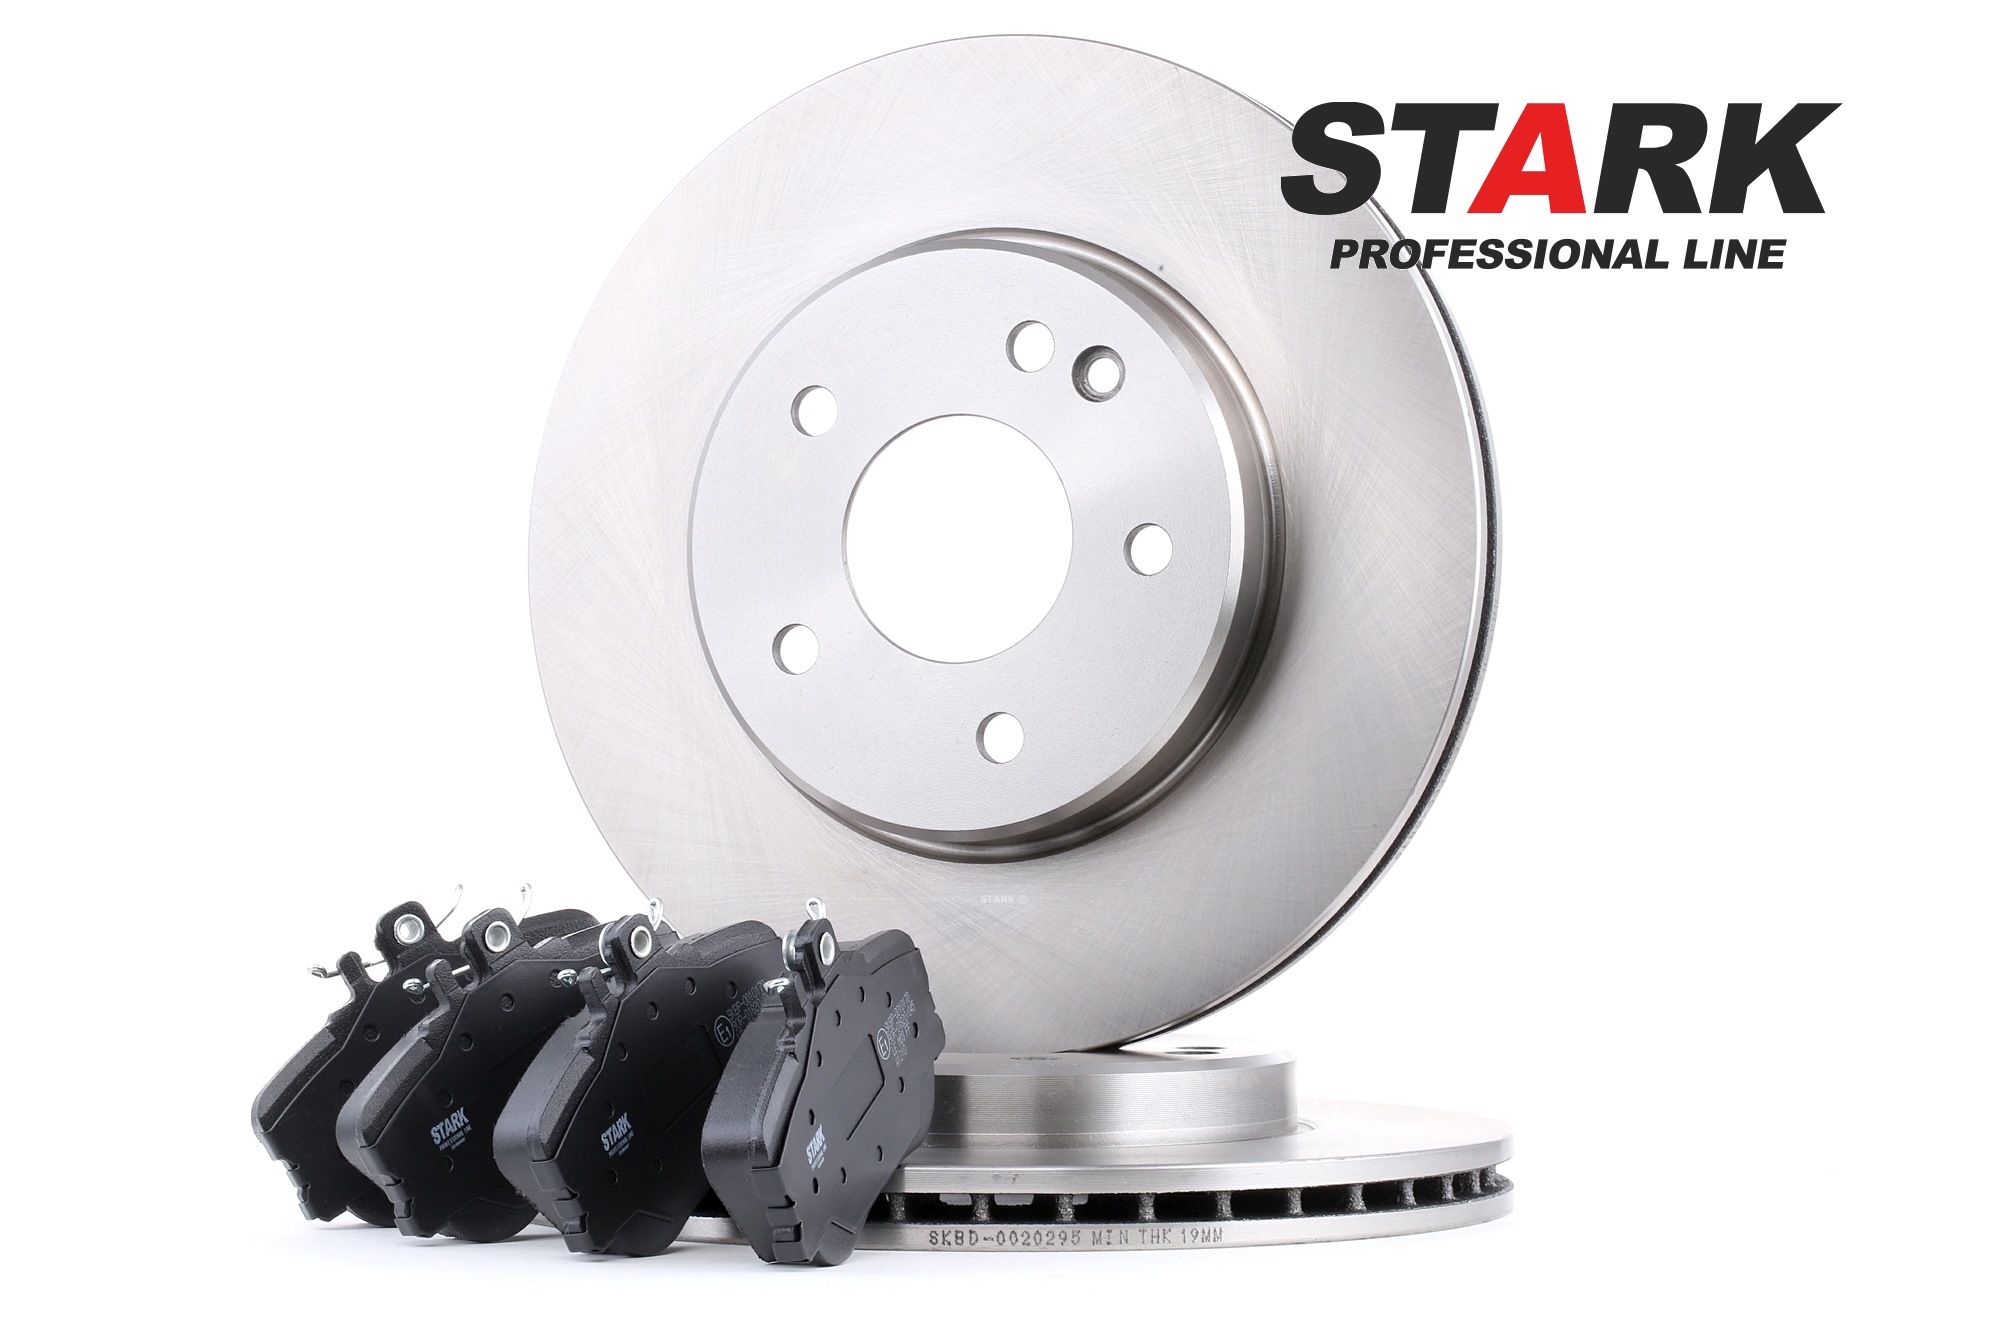 STARK SKBK-1090219 Brake discs and pads set Front Axle, Vented